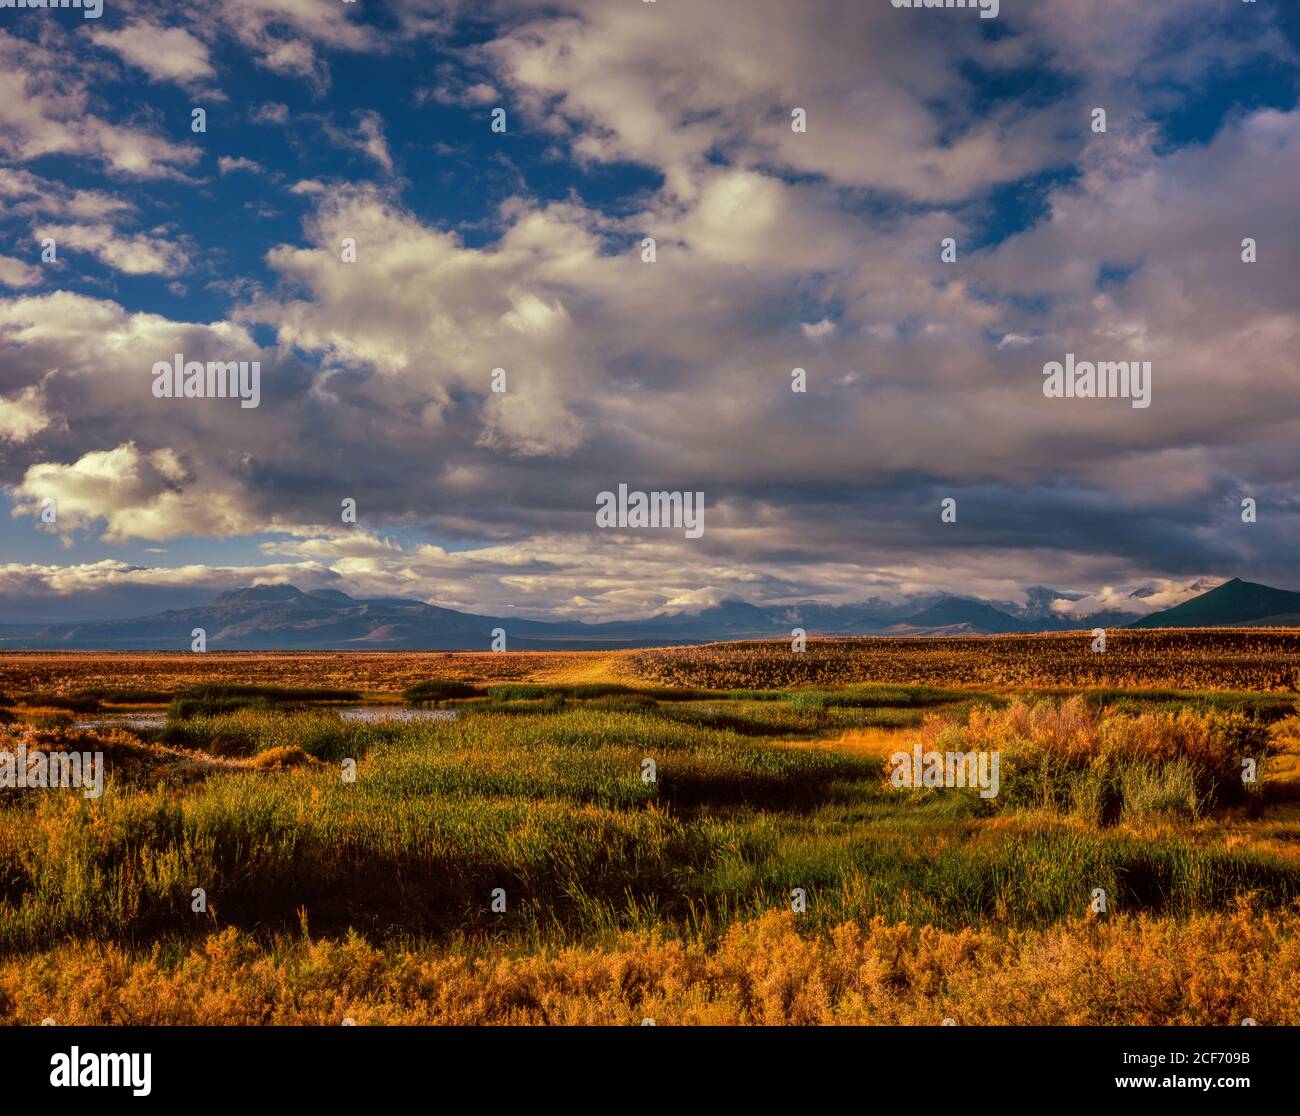 Feuchtgebiete, Mono Basin National Forest Scenic Area, Inyo National Forest, Eastern Sierra, Kalifornien Stockfoto